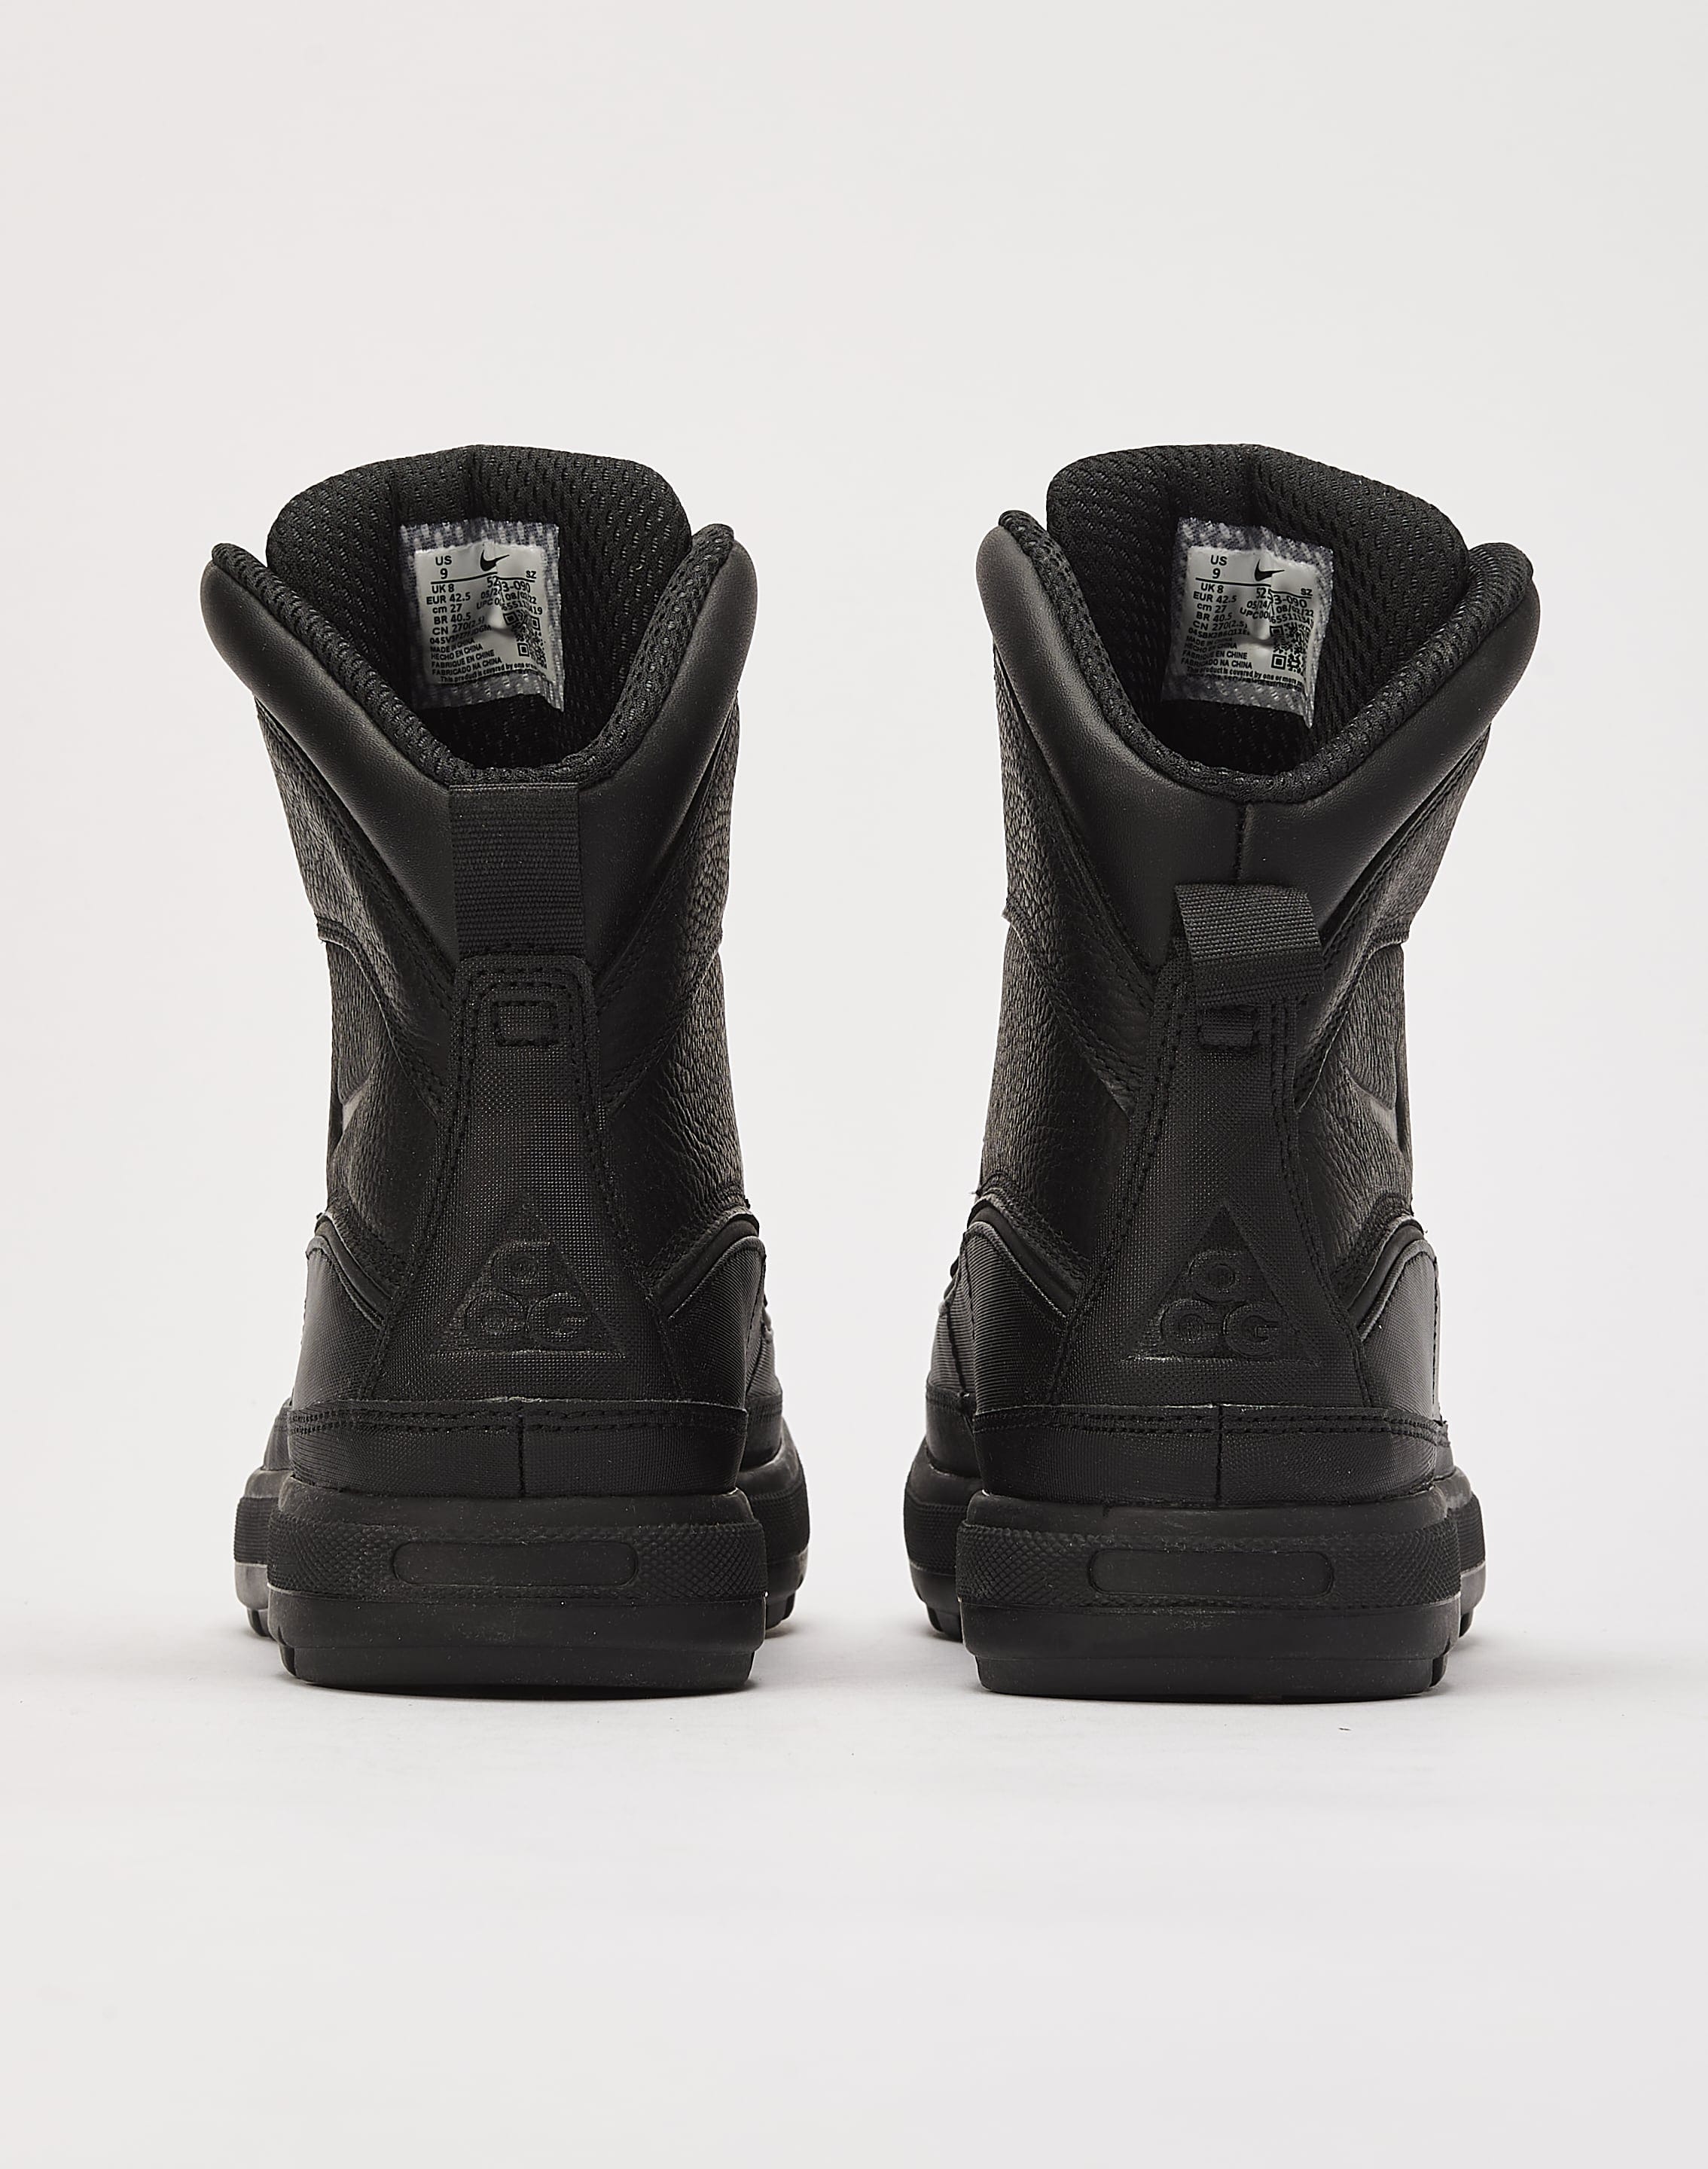 Nike Woodside 2 ACG Boots – DTLR